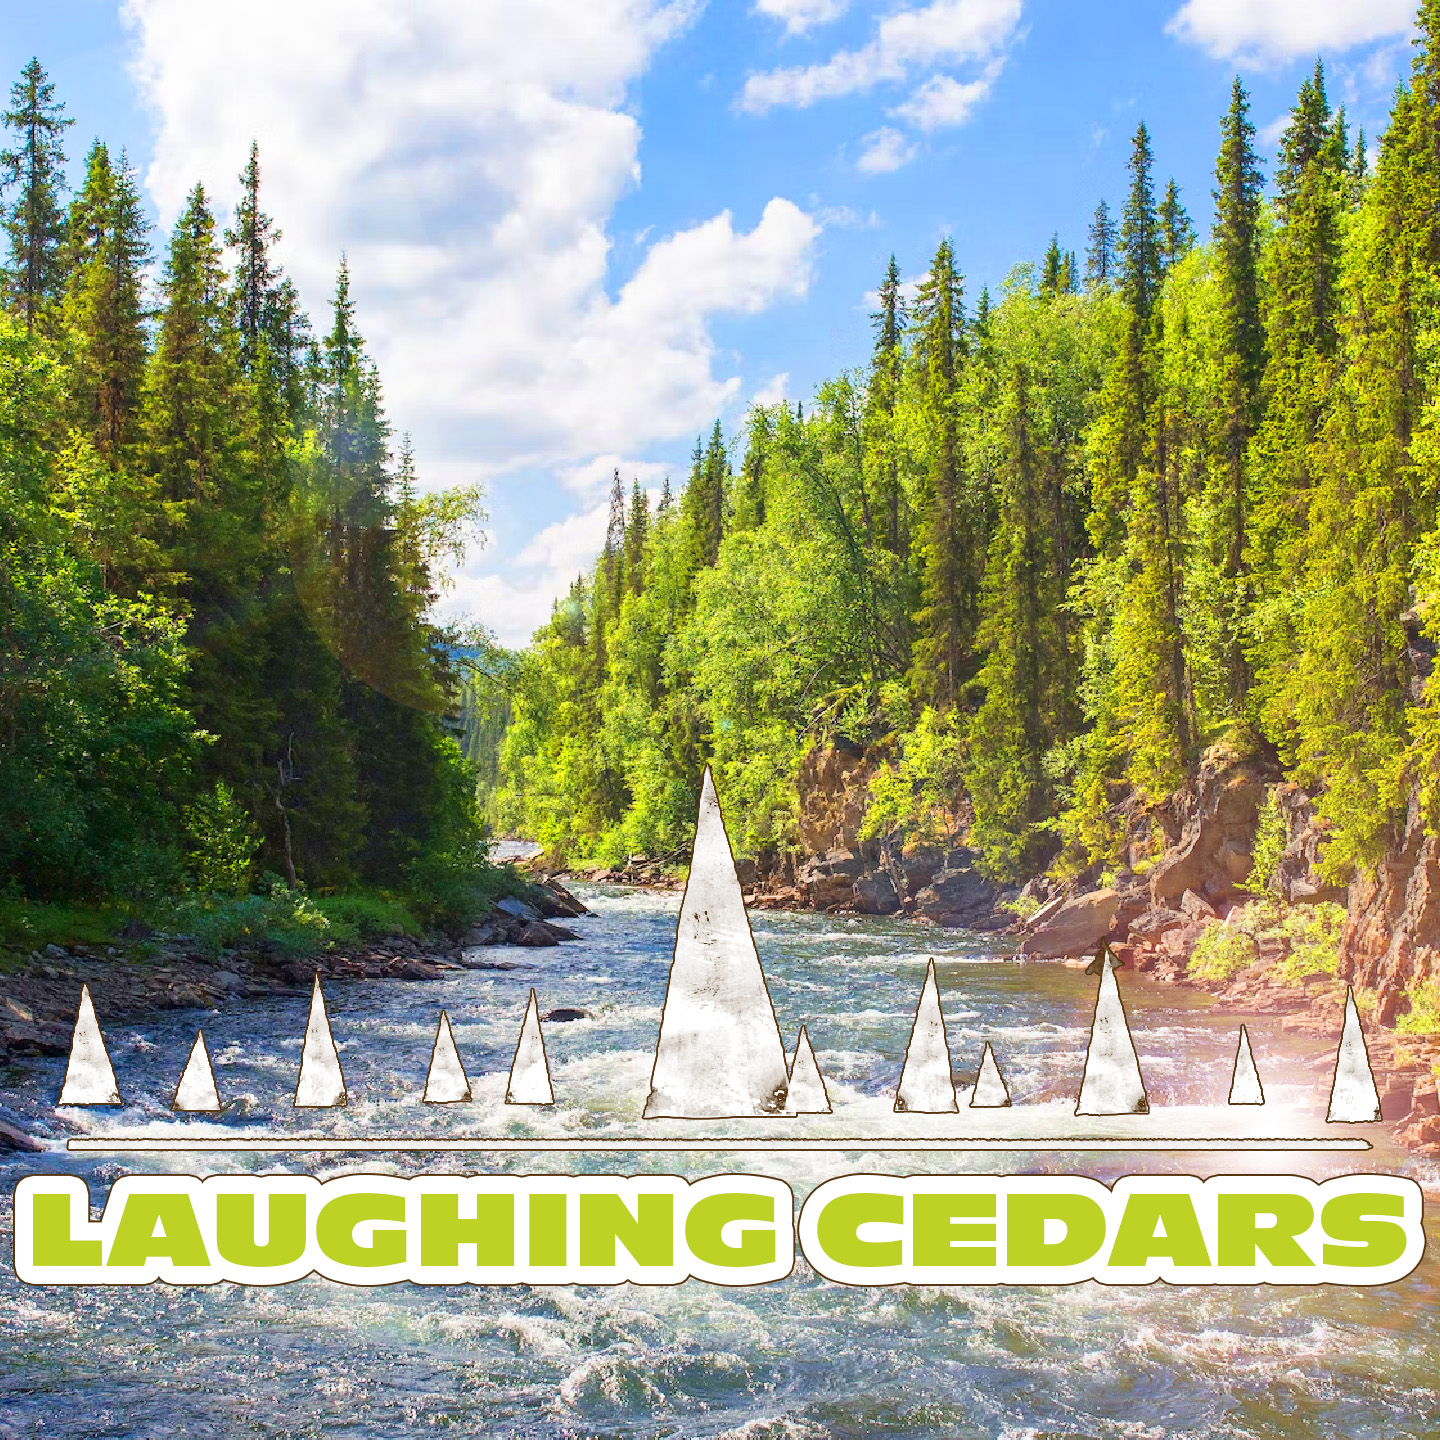 Laughing Cedars 5: Fire!